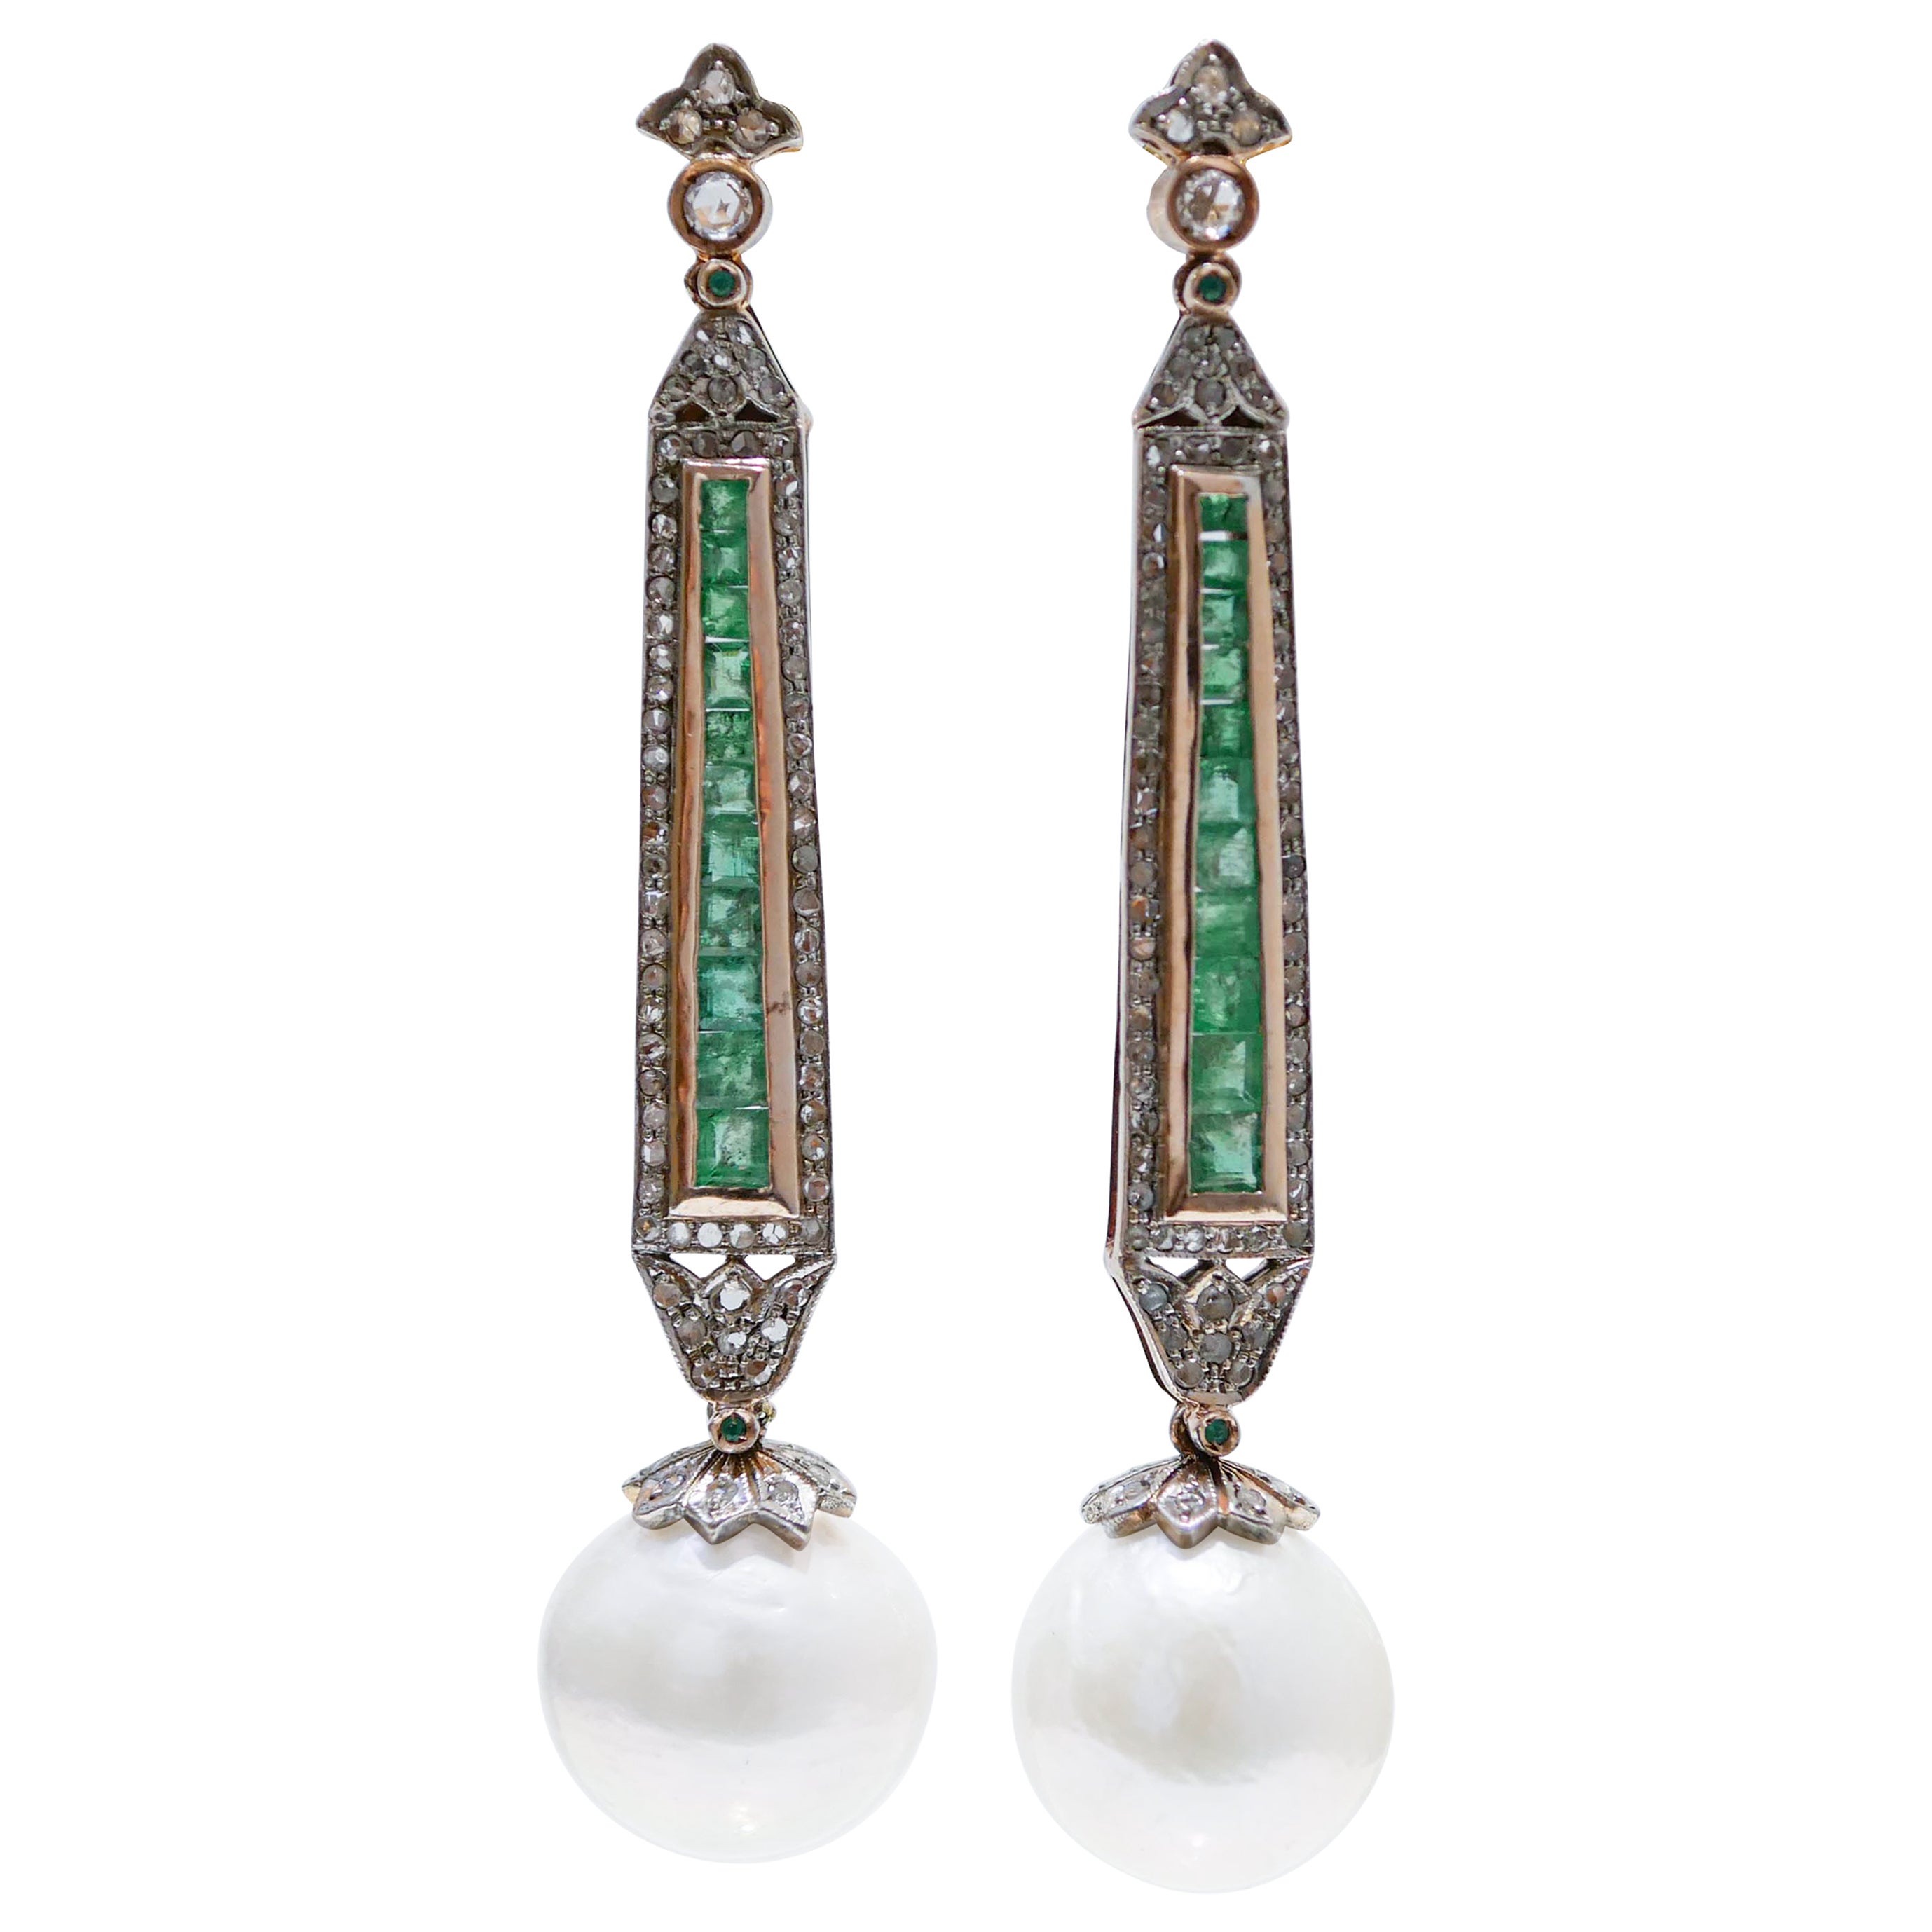 Grey Pearls, Emeralds, Diamonds, 14 Karat Rose Gold and Silver Earrings.